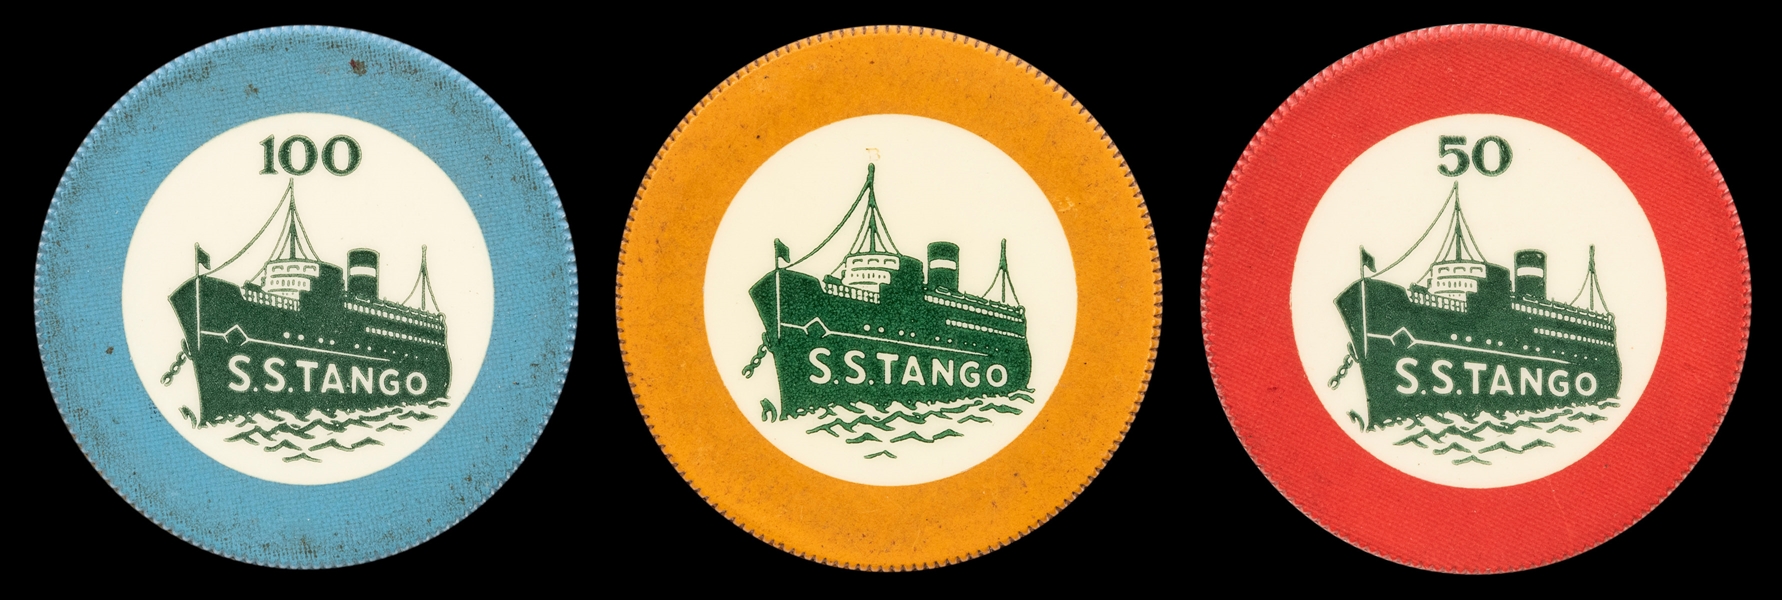  S.S. Tango Crest & Seal Casino Chips (3). Circa 1930s. In r...